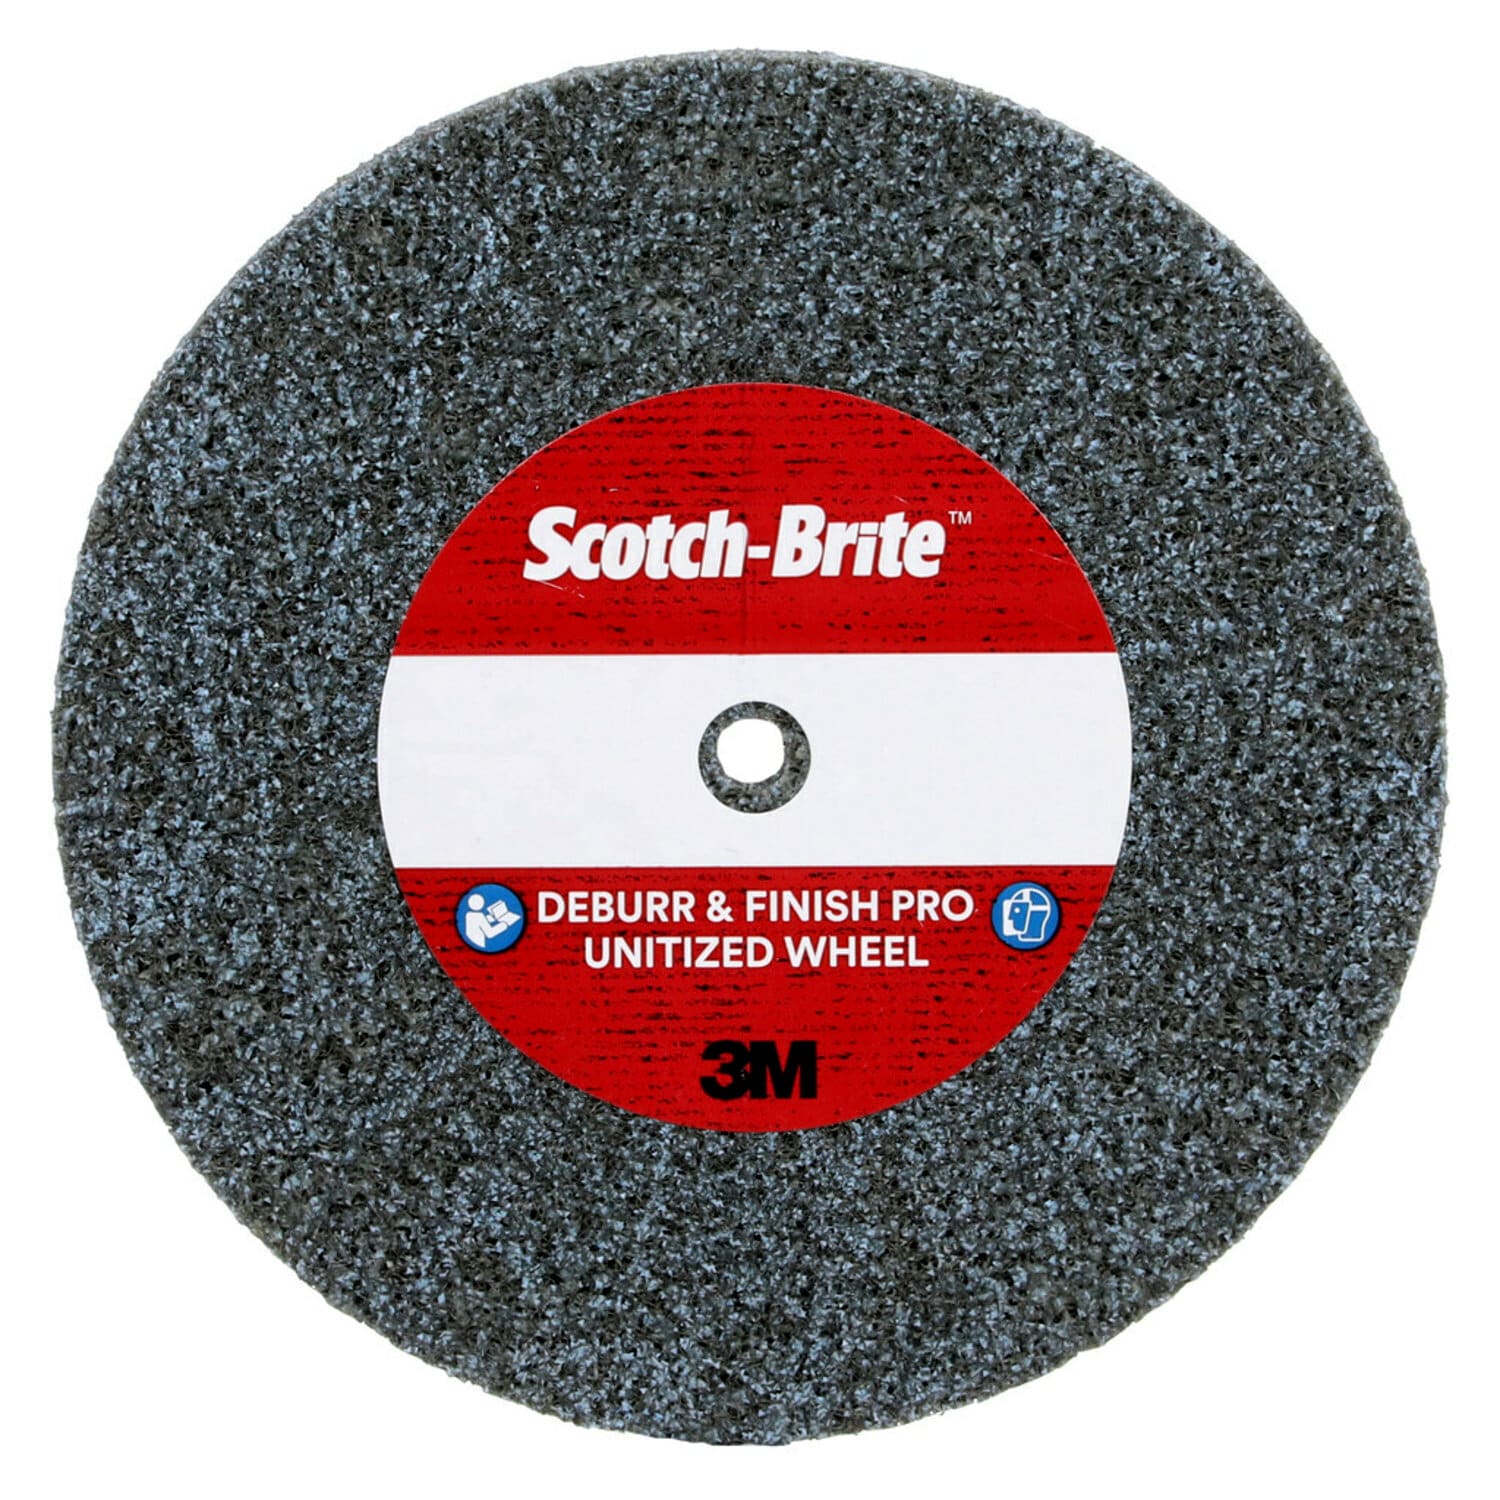 7010534349 - Scotch-Brite Deburr & Finish Pro Unitized Wheel, DP-UW, 8C Coarse+, 3
in x 1/2 in x 3 in